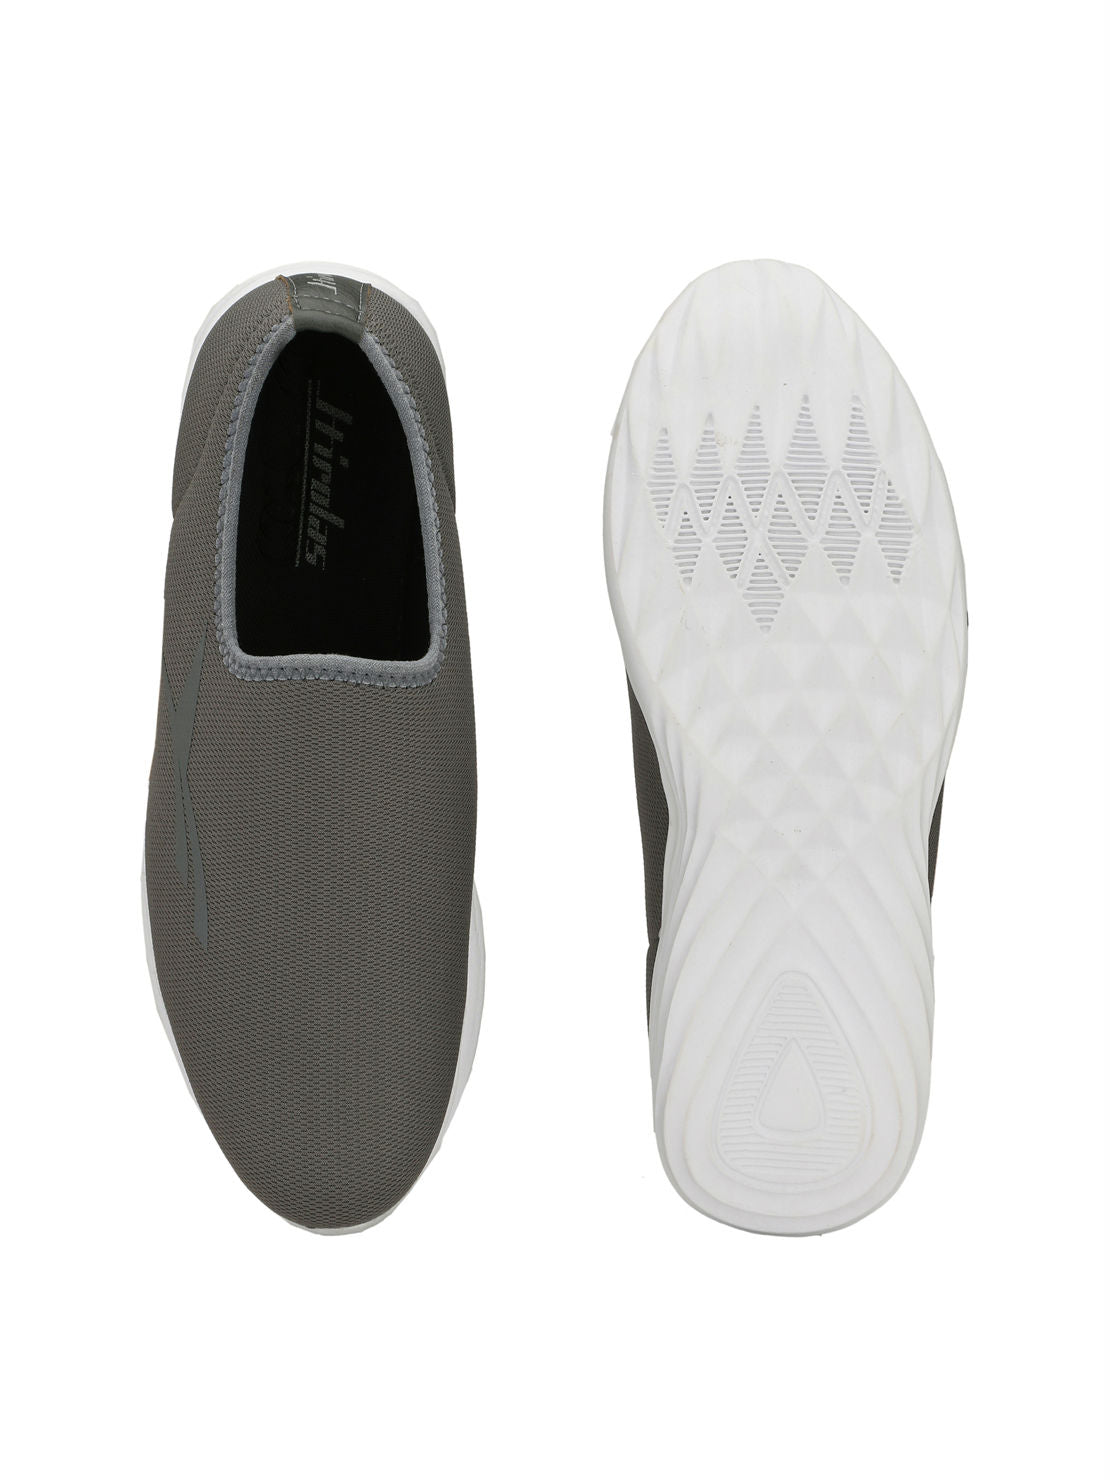 Hirolas® Men's Black Slip On Walking Sport Shoes (HRL1933GRY)